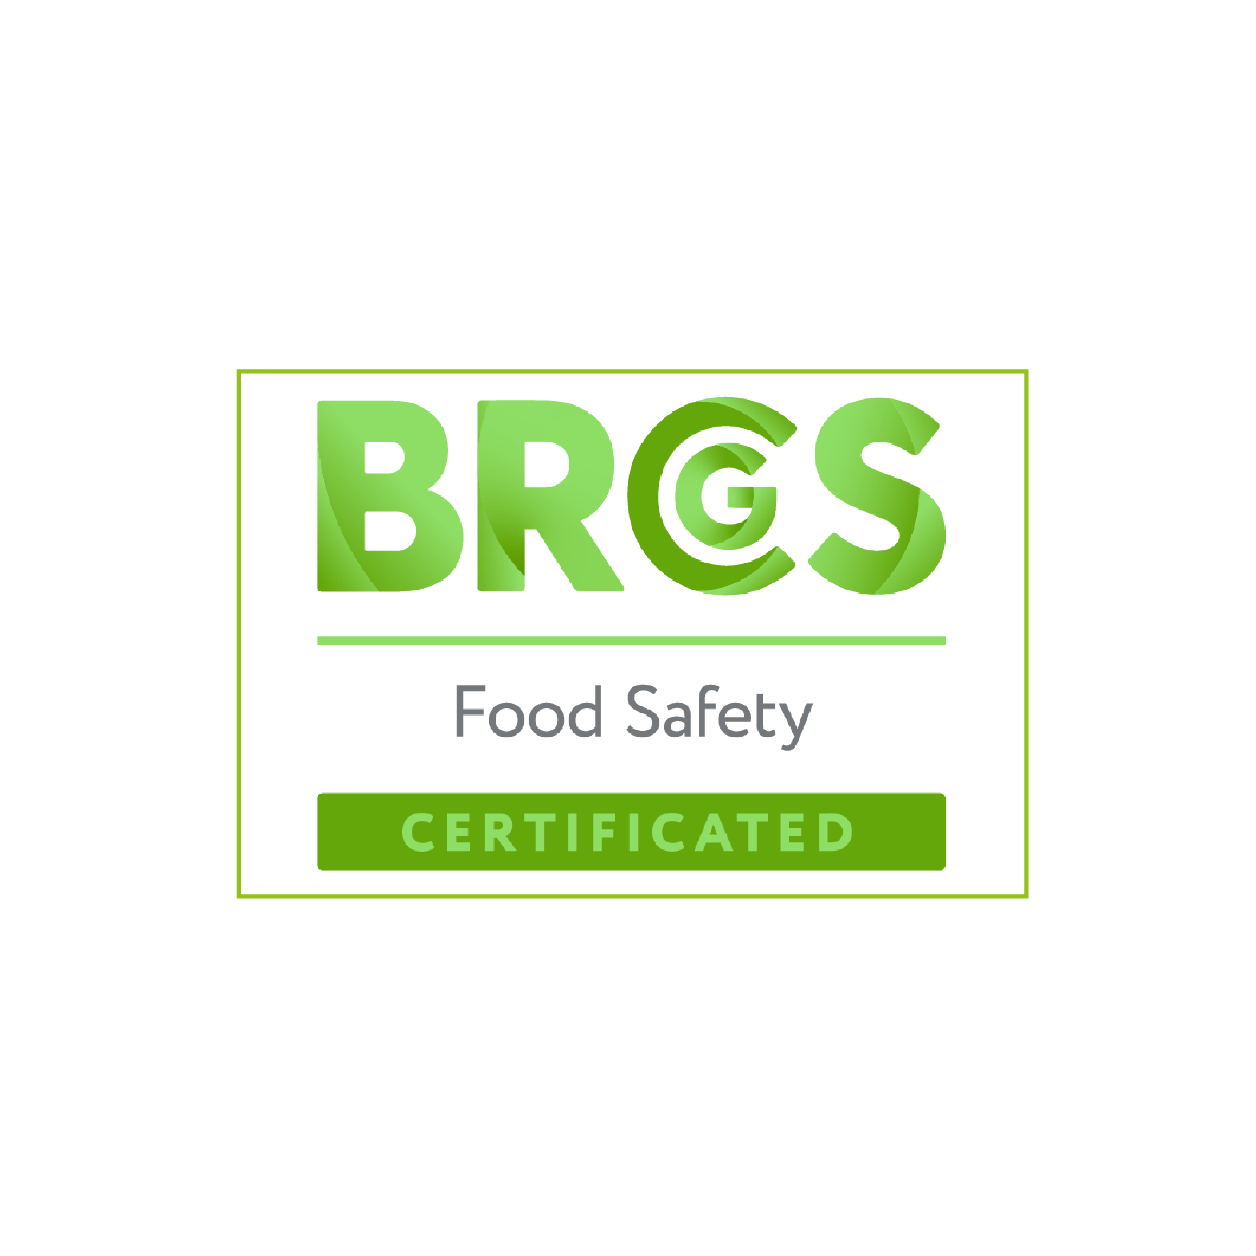 BRCS Food Safety Logo